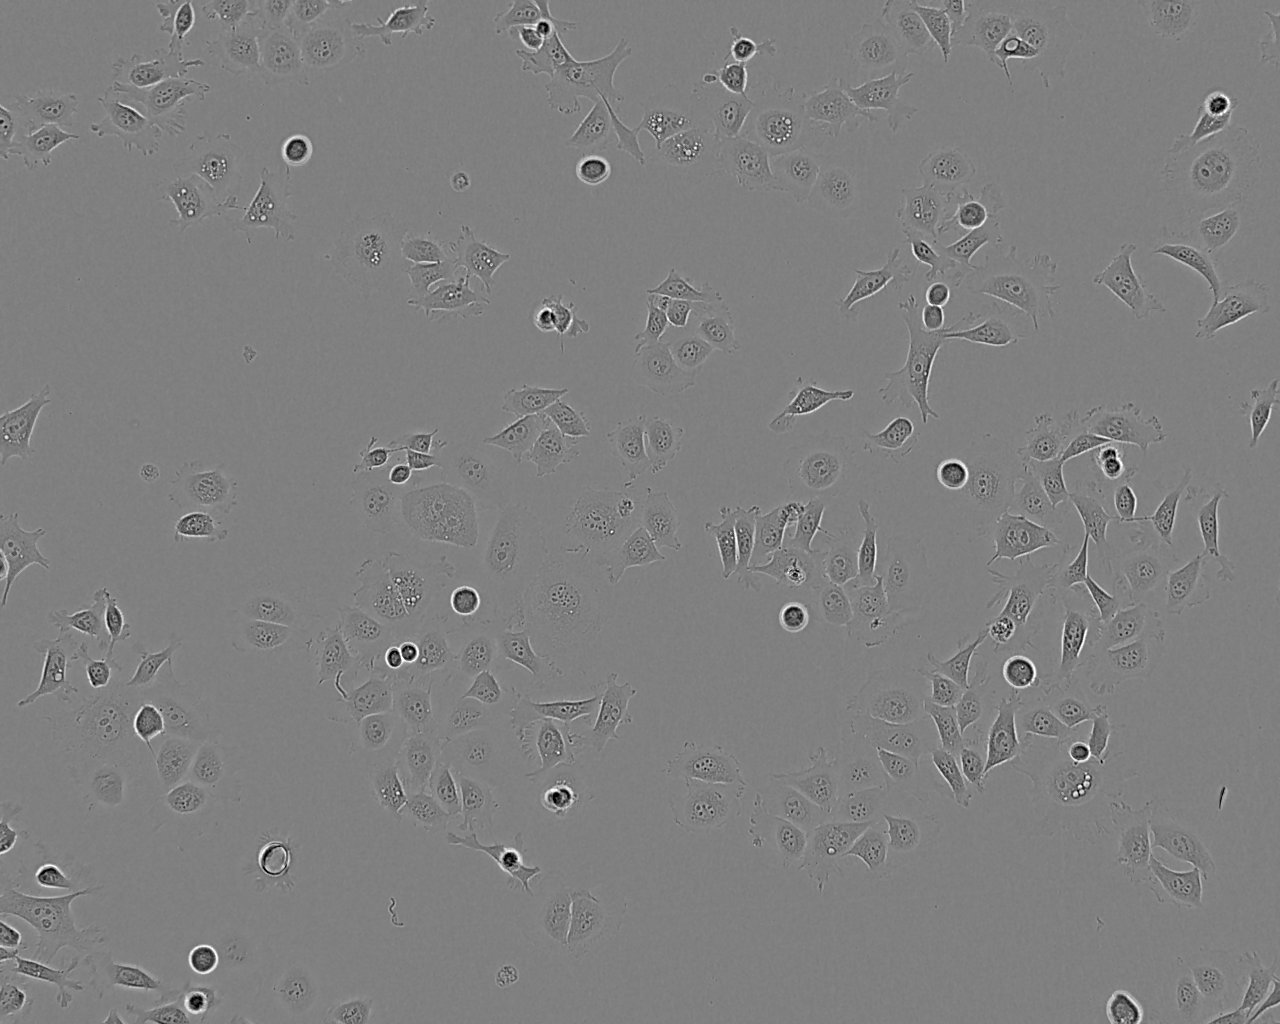 KLN205 Cell|小鼠肺鳞癌细胞,KLN205 Cell